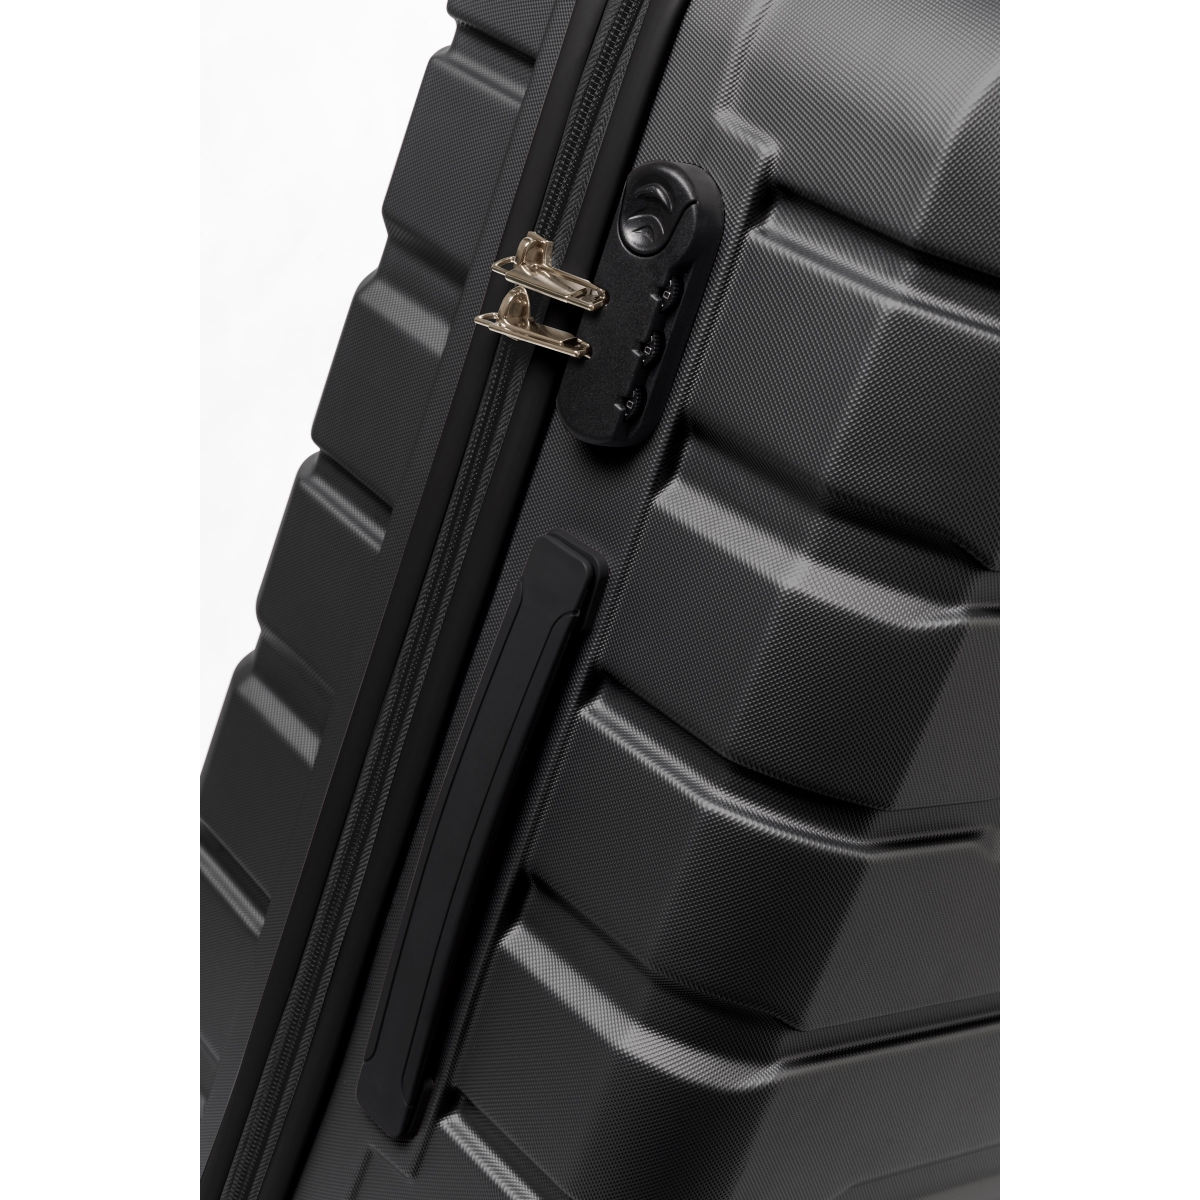 Gedox Abs Premium Tonaton 3'lü Valiz Seyahat Seti - Model:500.01 Siyah